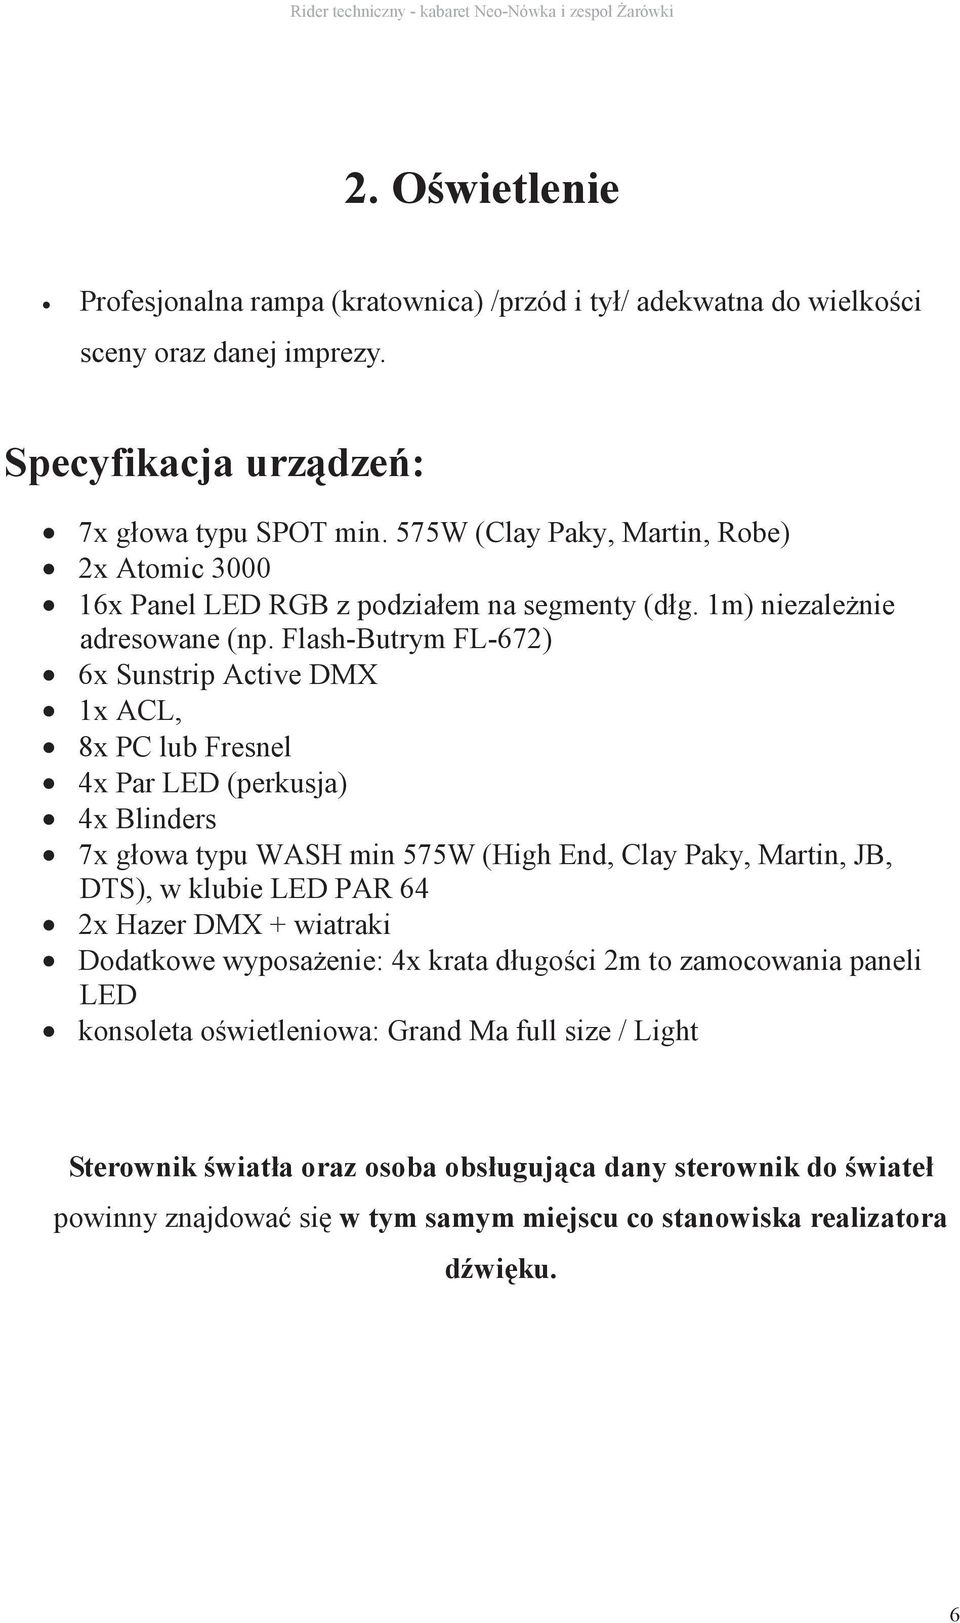 Flash-Butrym FL-672) 6x Sunstrip Active DMX 1x ACL, 8x PC lub Fresnel 4x Par LED (perkusja) 4x Blinders 7x głowa typu WASH min 575W (High End, Clay Paky, Martin, JB, DTS), w klubie LED PAR